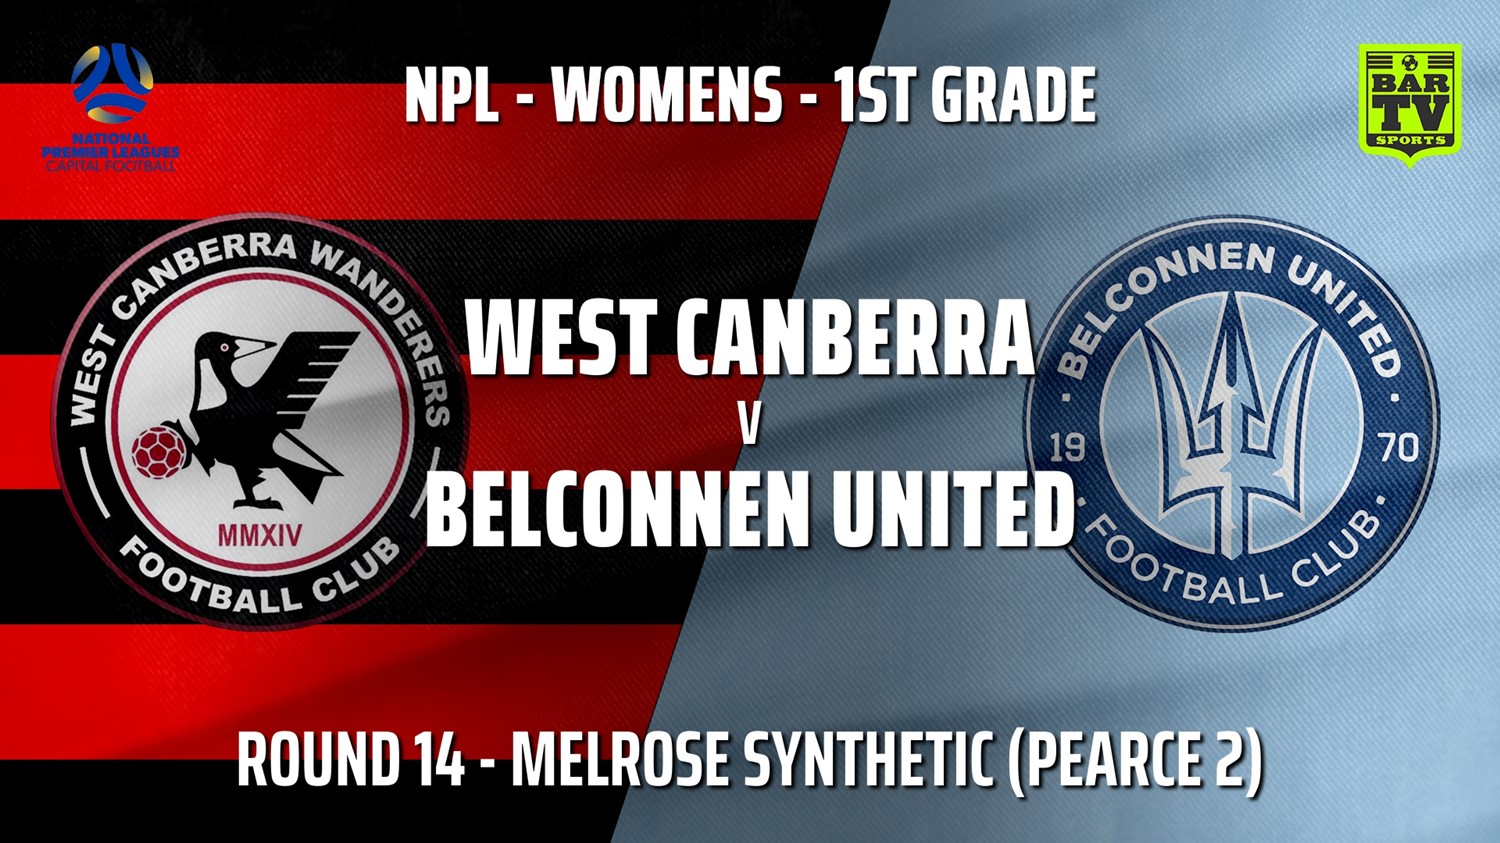 210718-Capital Womens Round 14 - West Canberra Wanderers FC (women) v Belconnen United (women) Slate Image